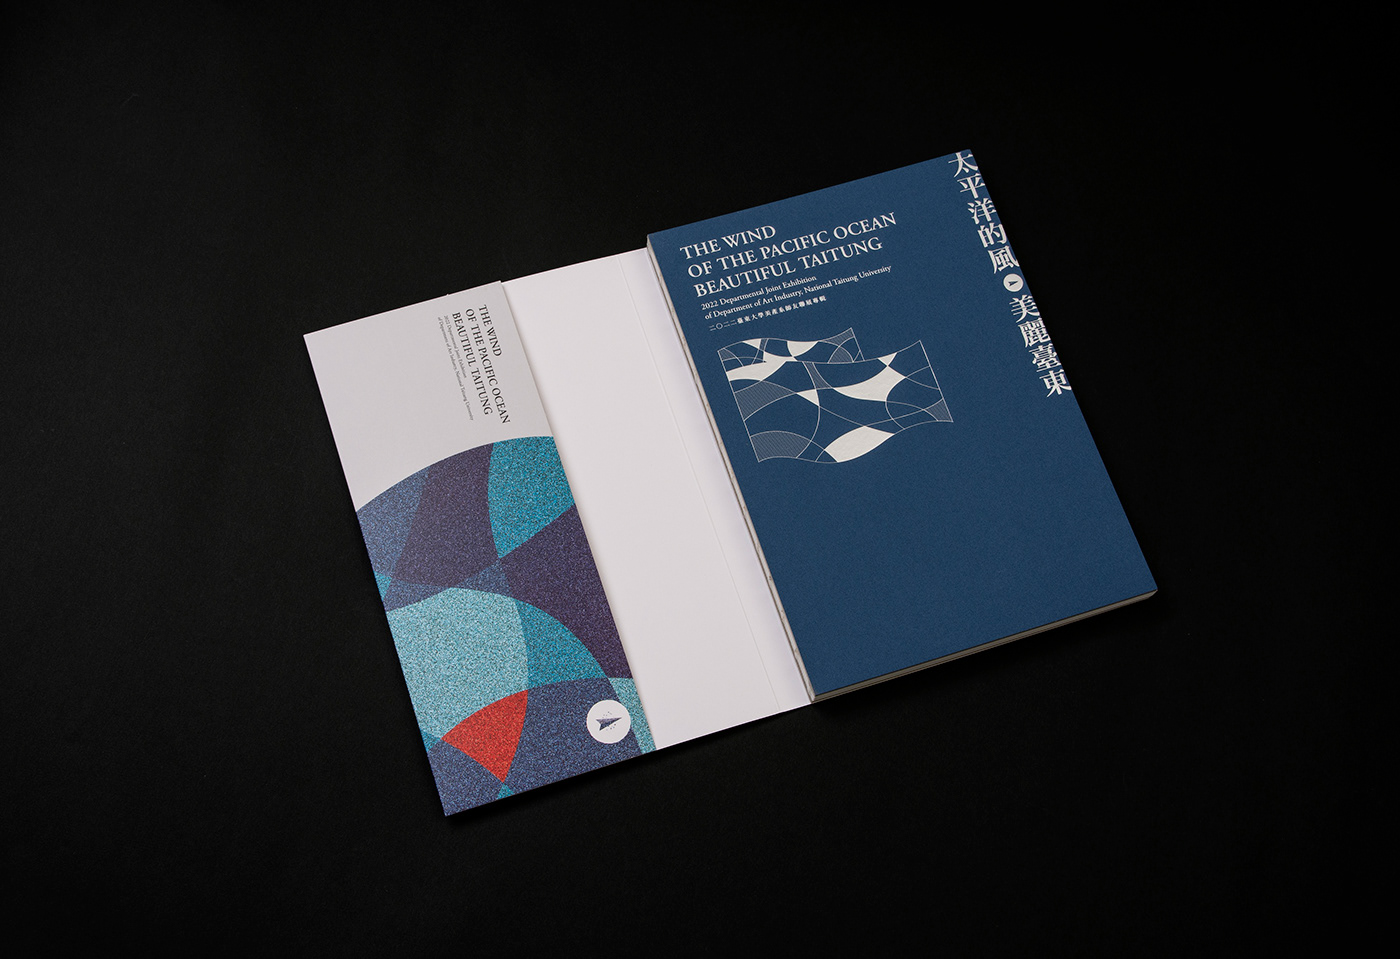 book Exhibition  folder graphic design  Ocean pacific poster Taitung 太平洋 臺東大學